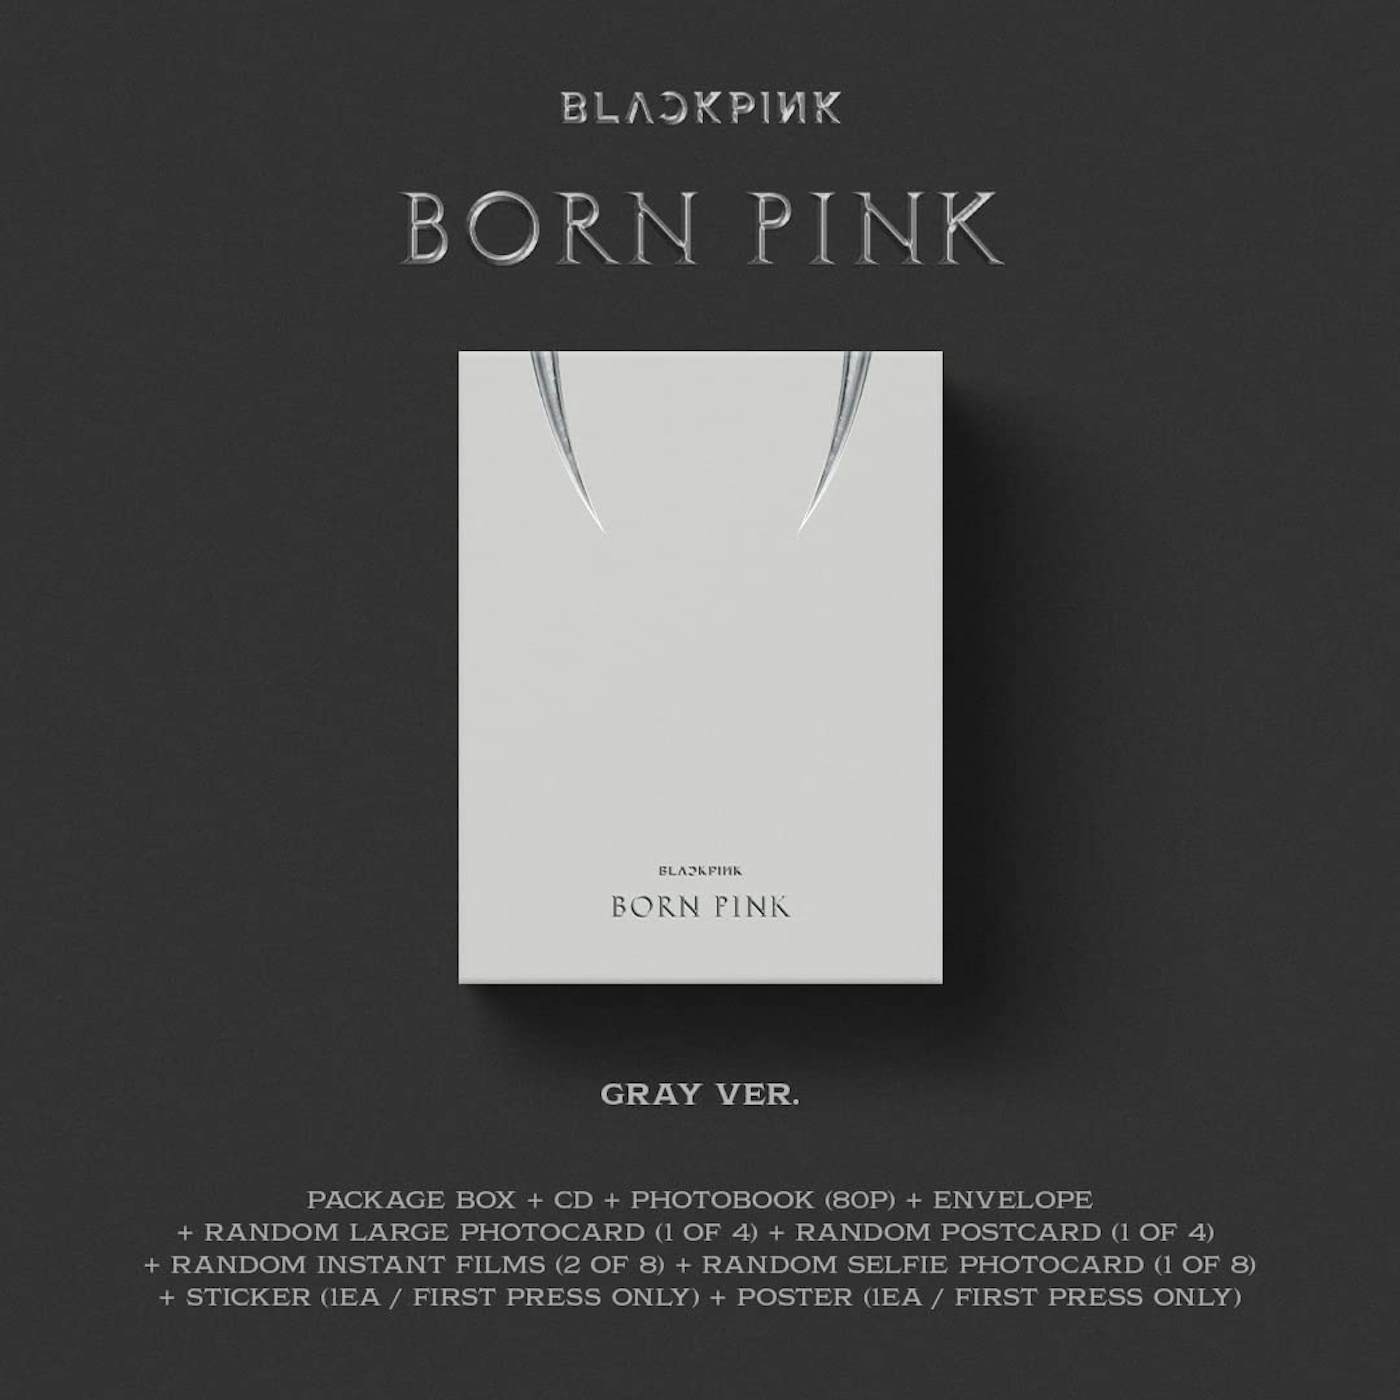 BLACKPINK BORN PINK (STANDARD CD BOXSET - VERSION C / GRAY) CD